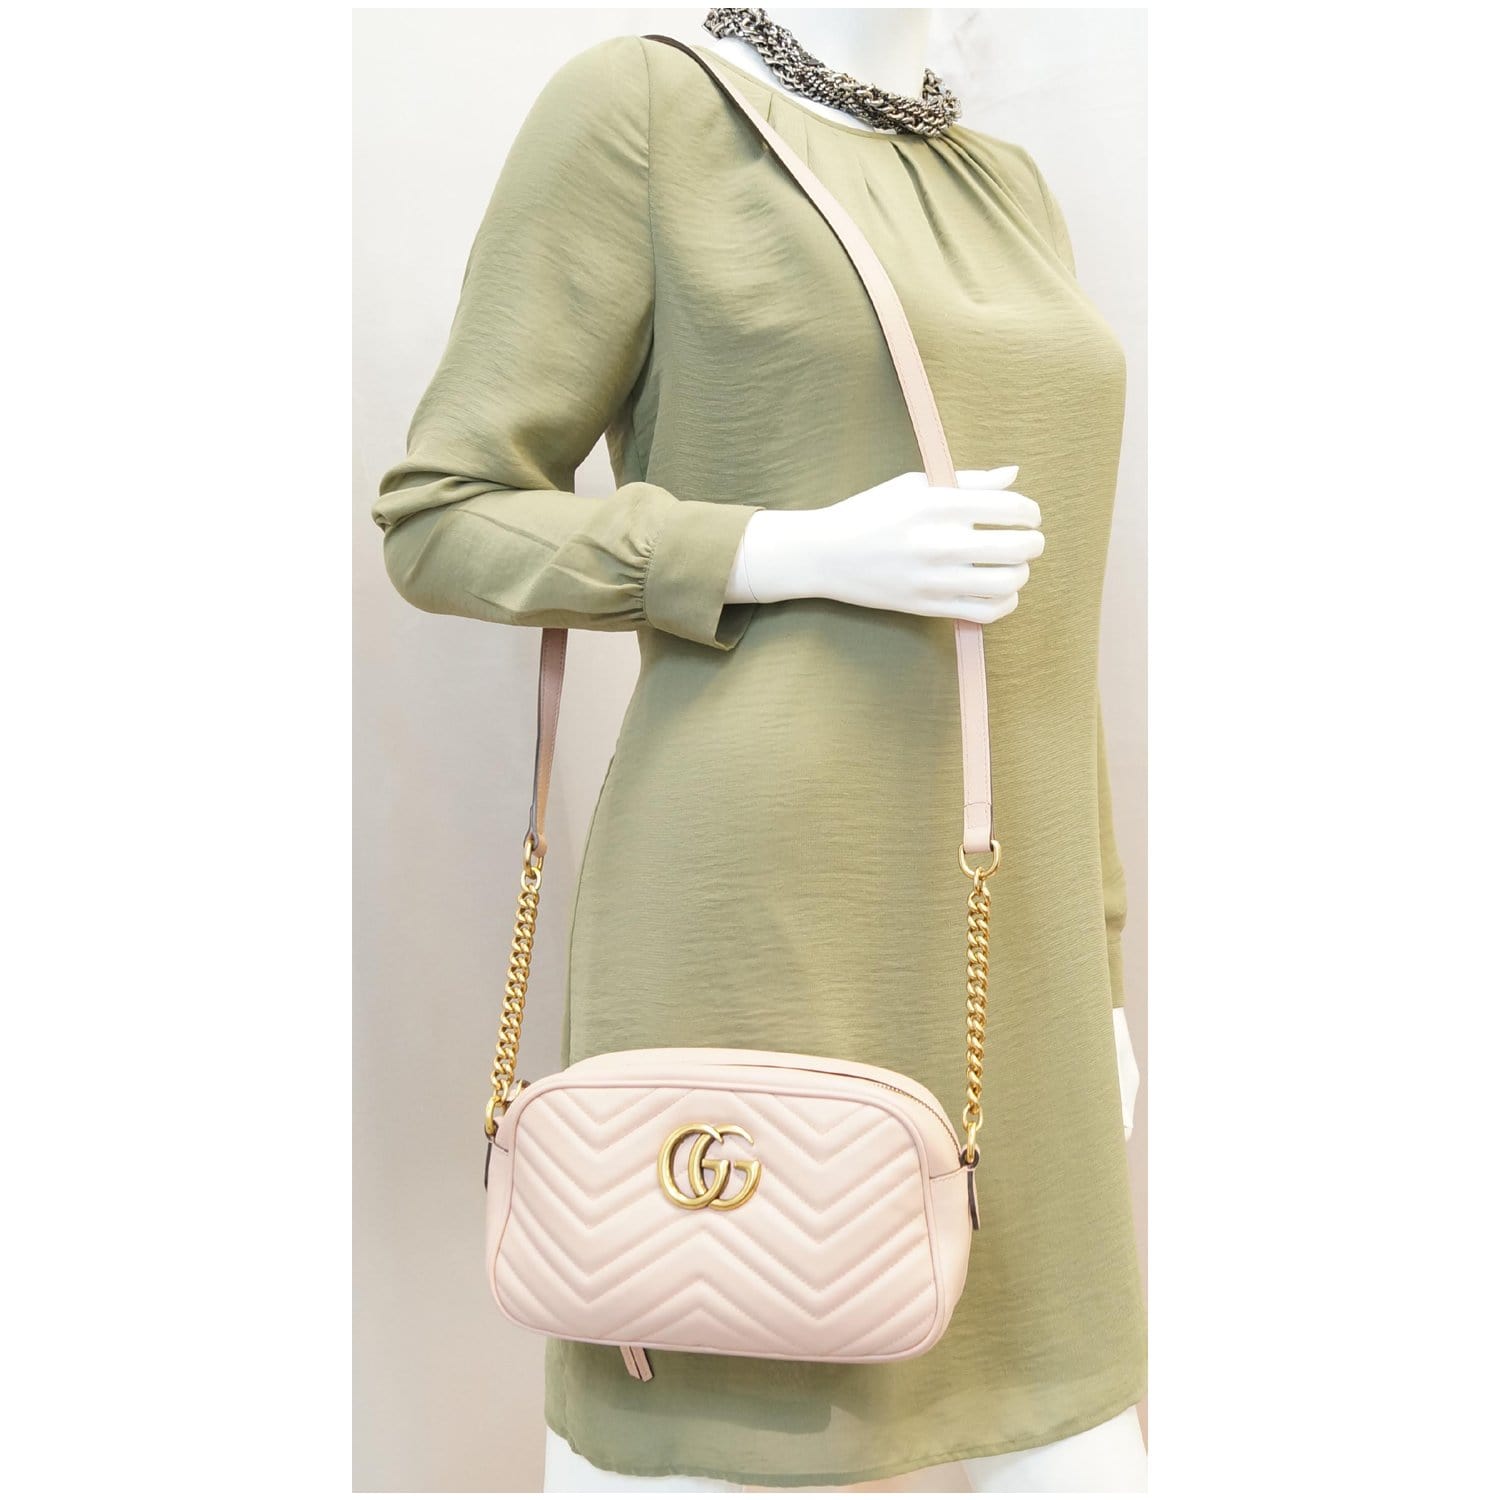 GG Matelassé handbag in pink leather